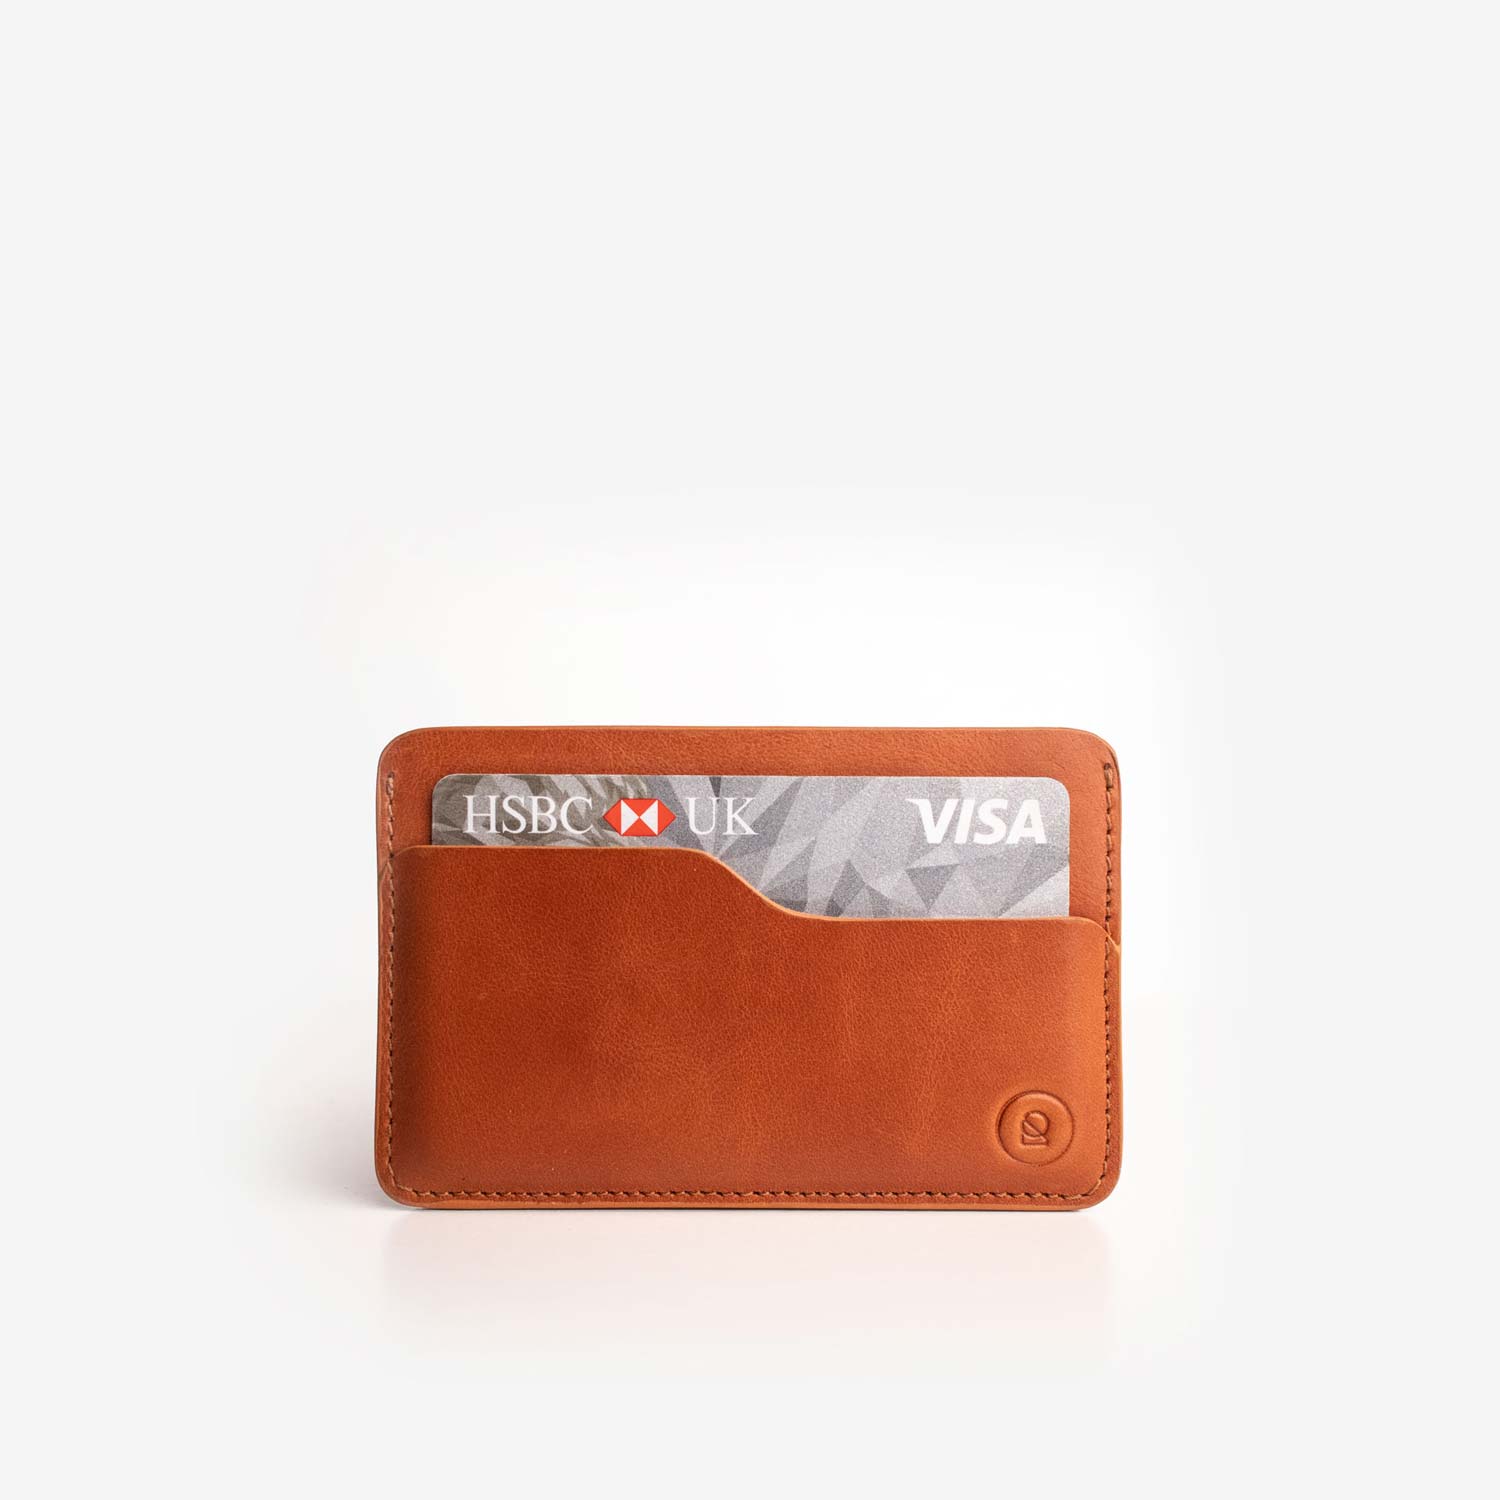 Everything looks Better in Orange -5 Pockets super Slim card